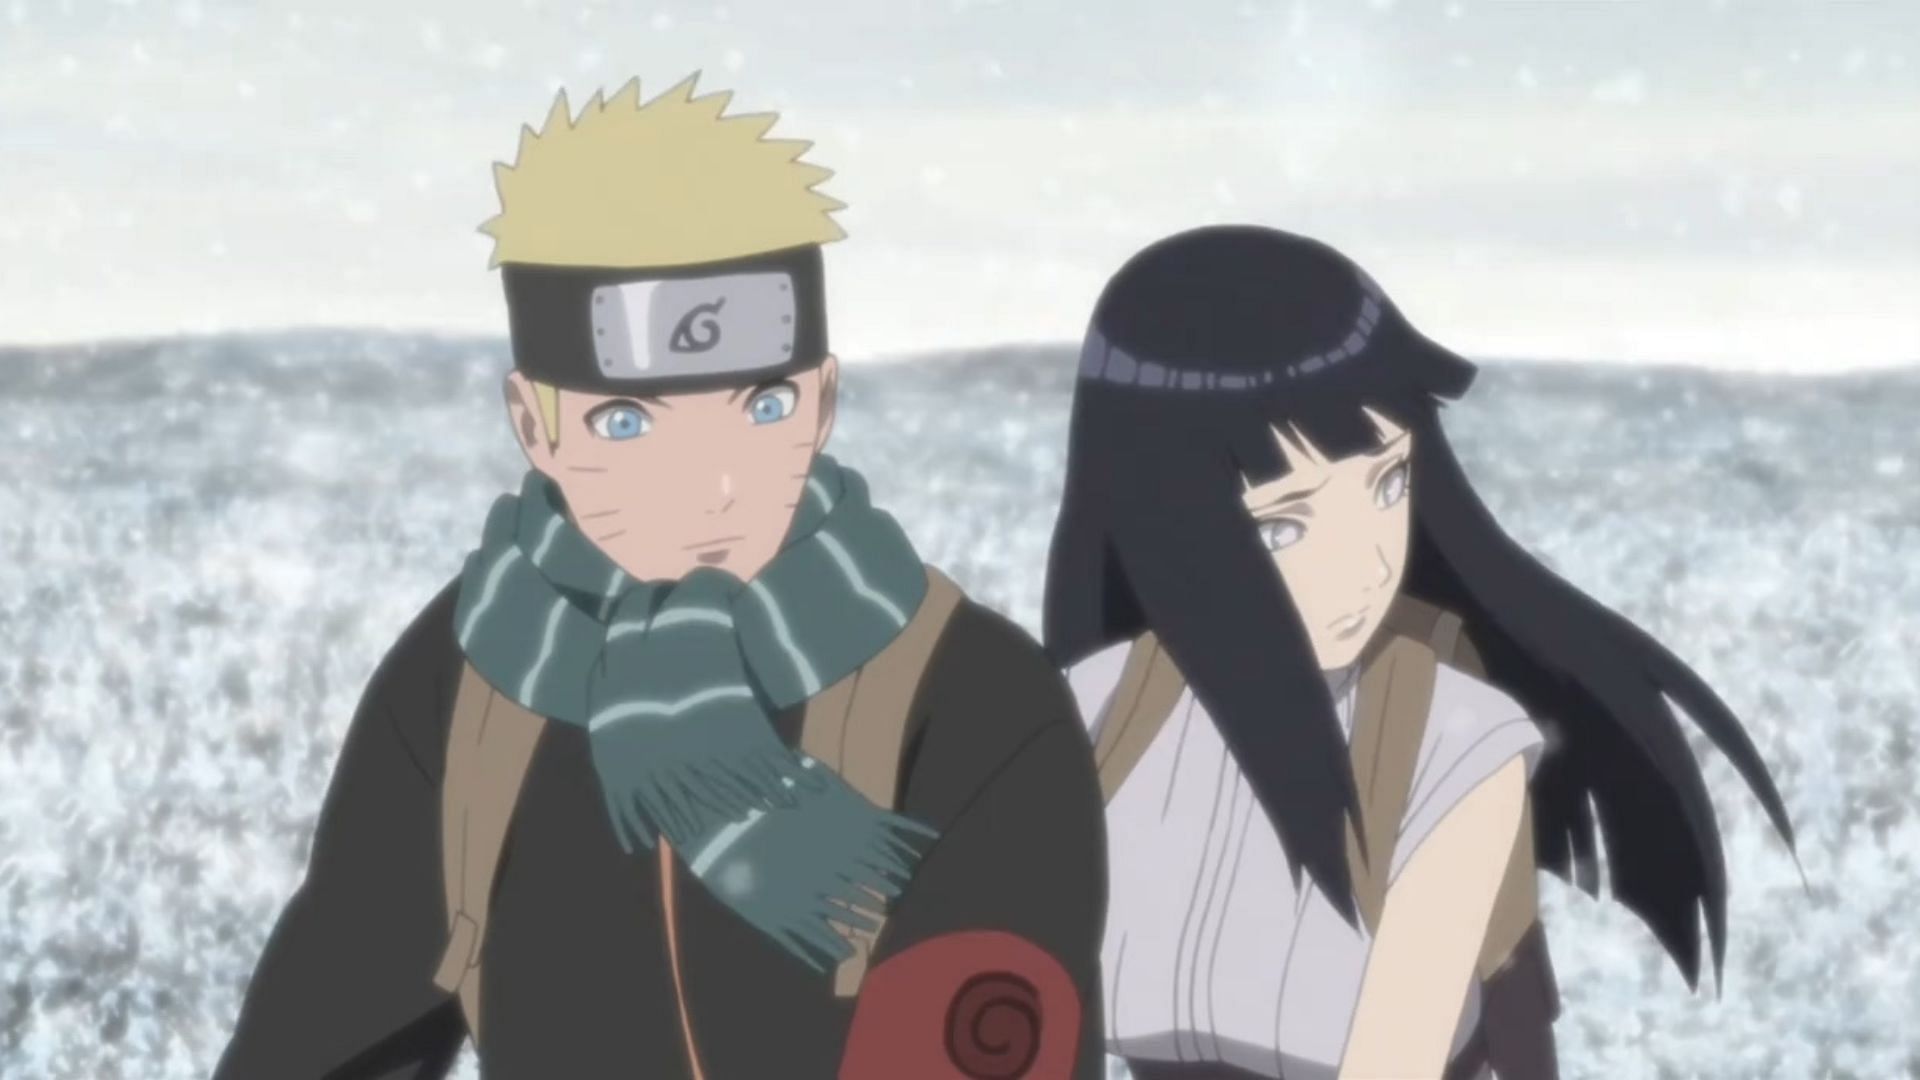 Naruto and Hinata as seen in the movie (Image via Studio Pierrot)